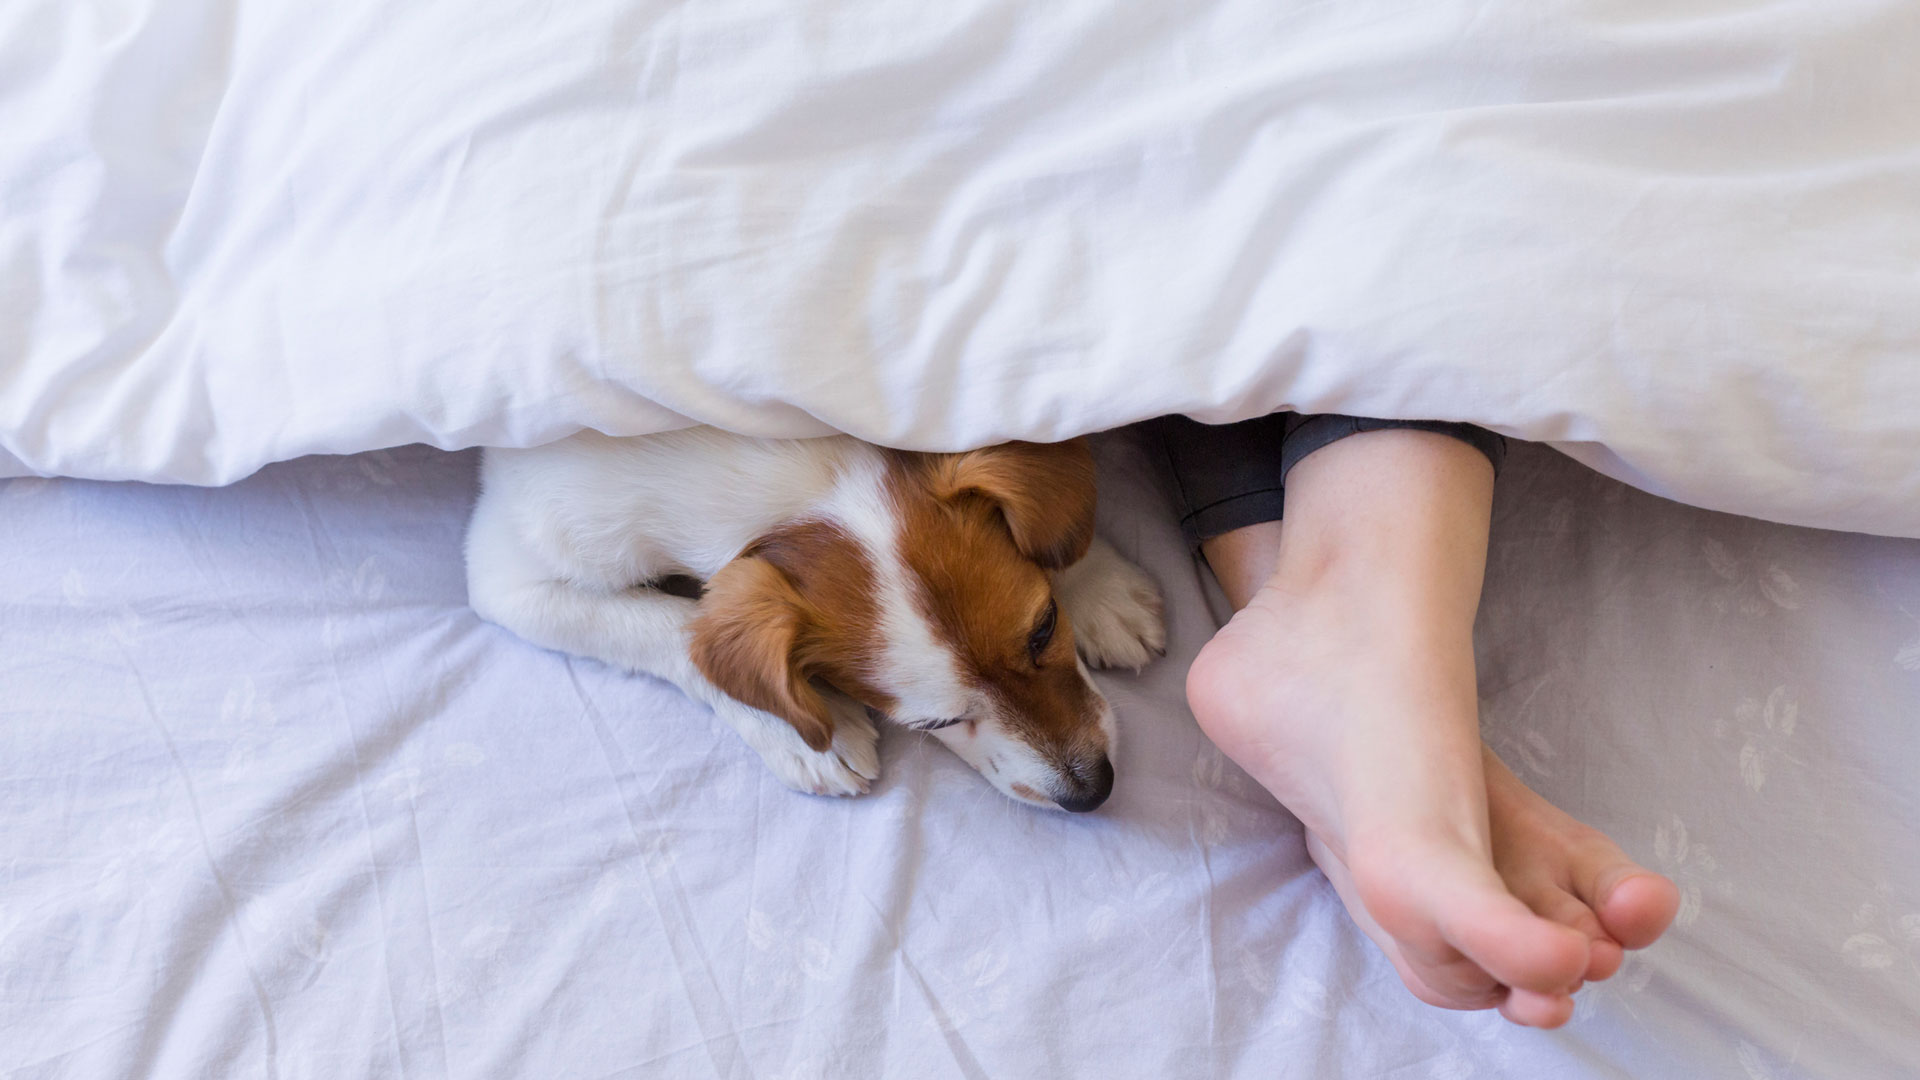 Best duvet: a dog and a pair of feet sticking out from under a duvet